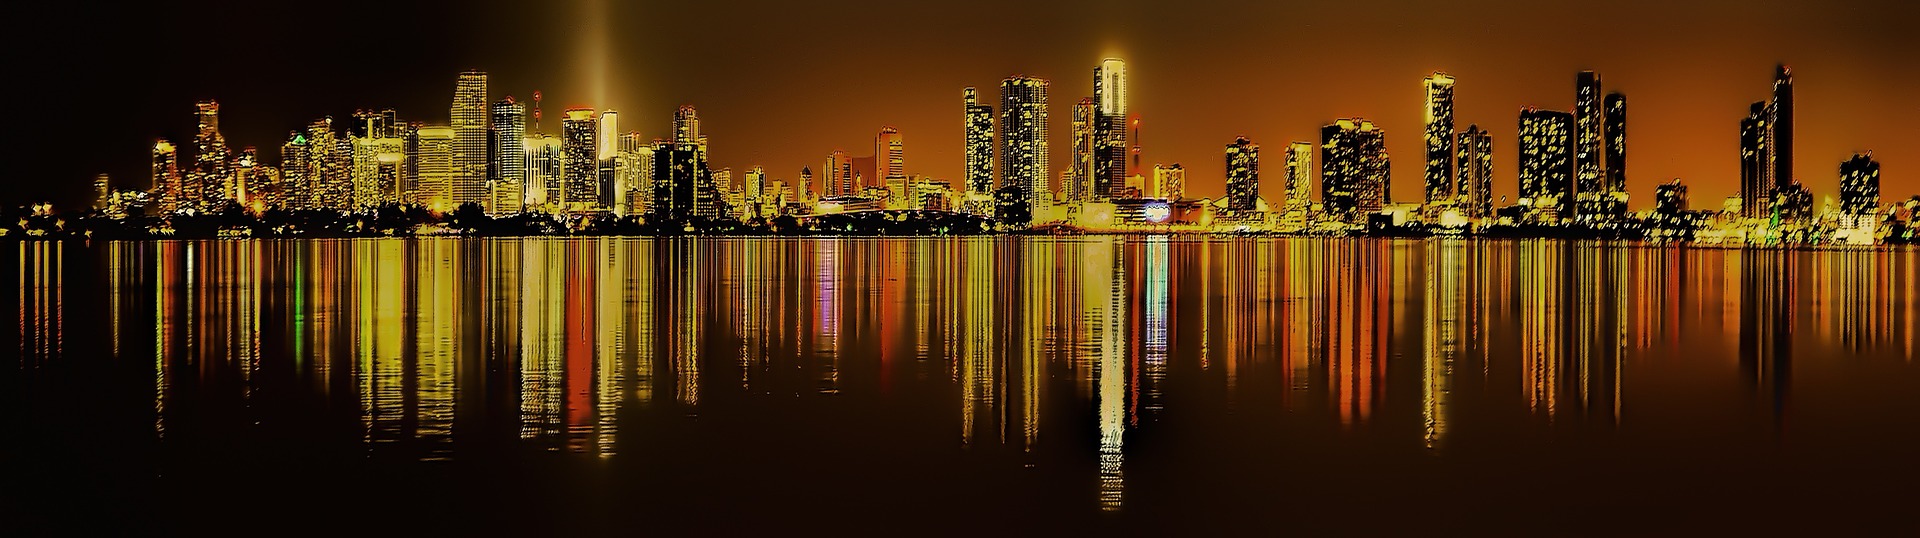 Downtown Miami, Florida at night